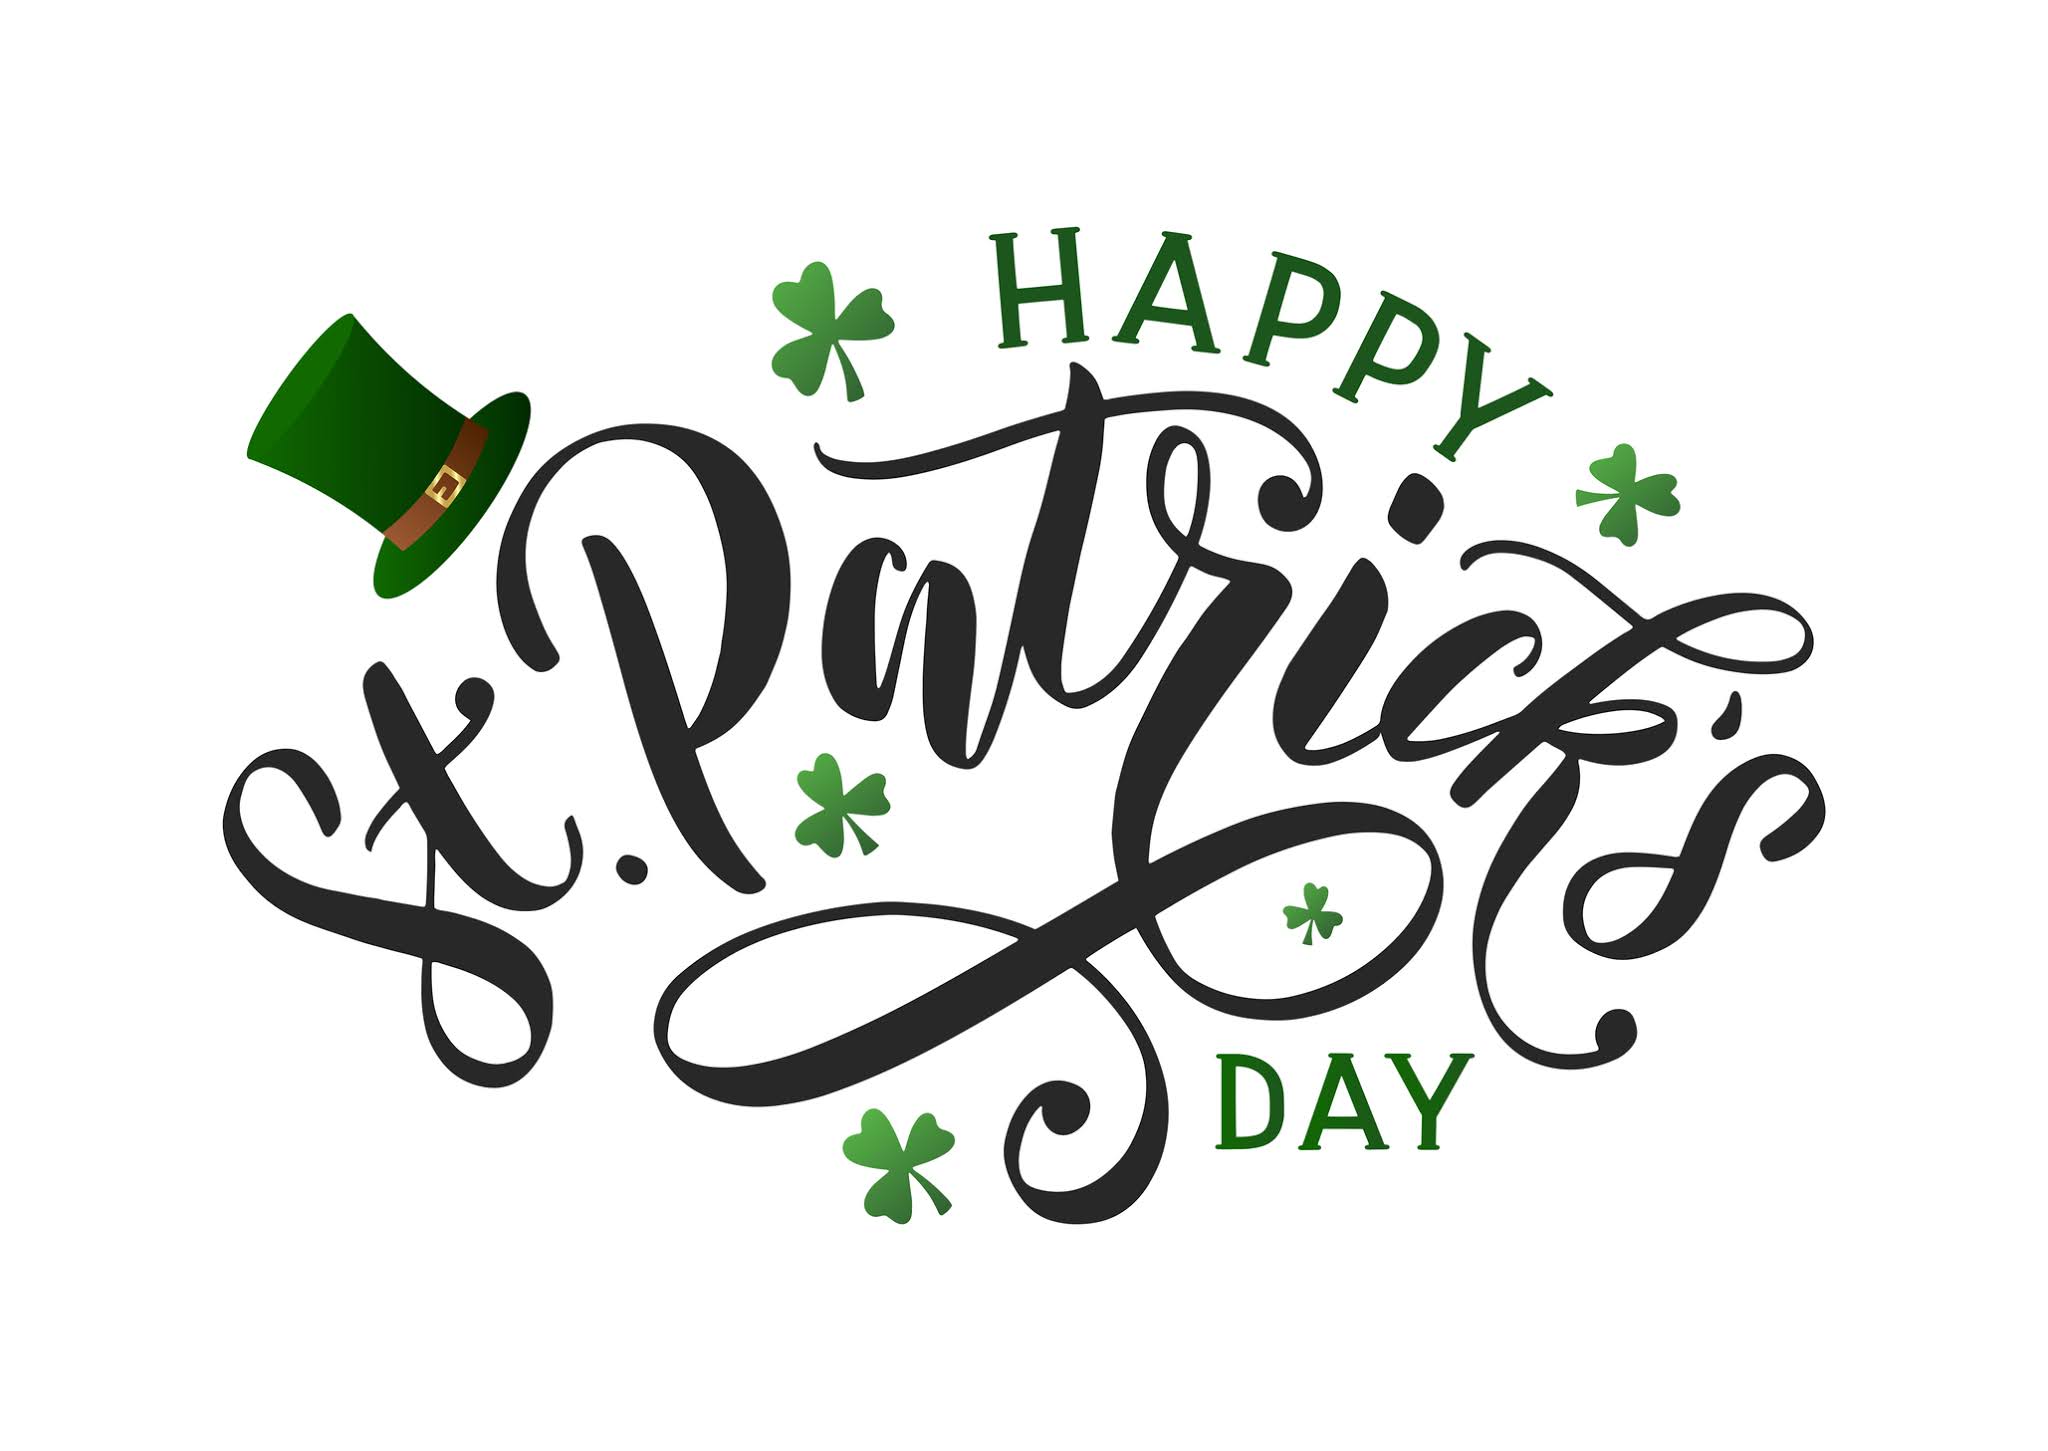 St. Patrick's Day ad